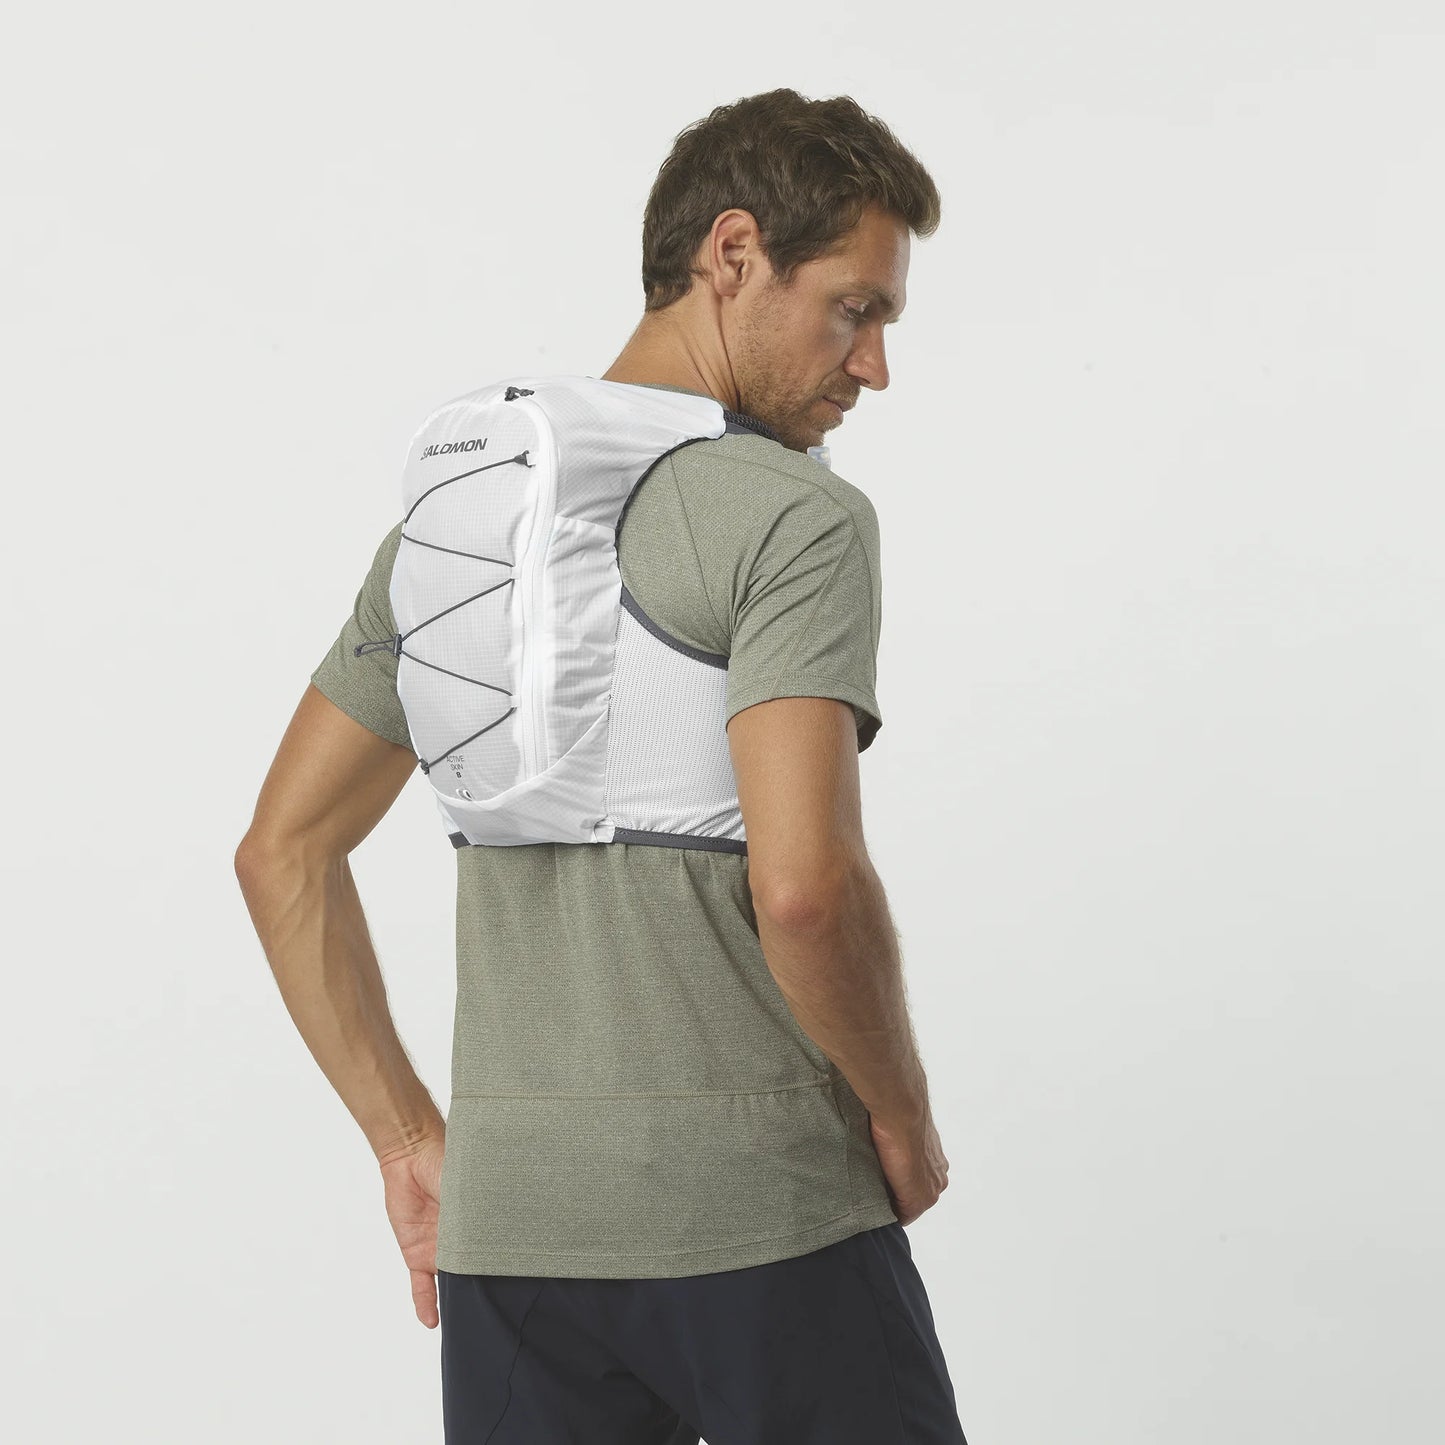 Salomon - Active Skin 8 - white /ebony - unisex running vest